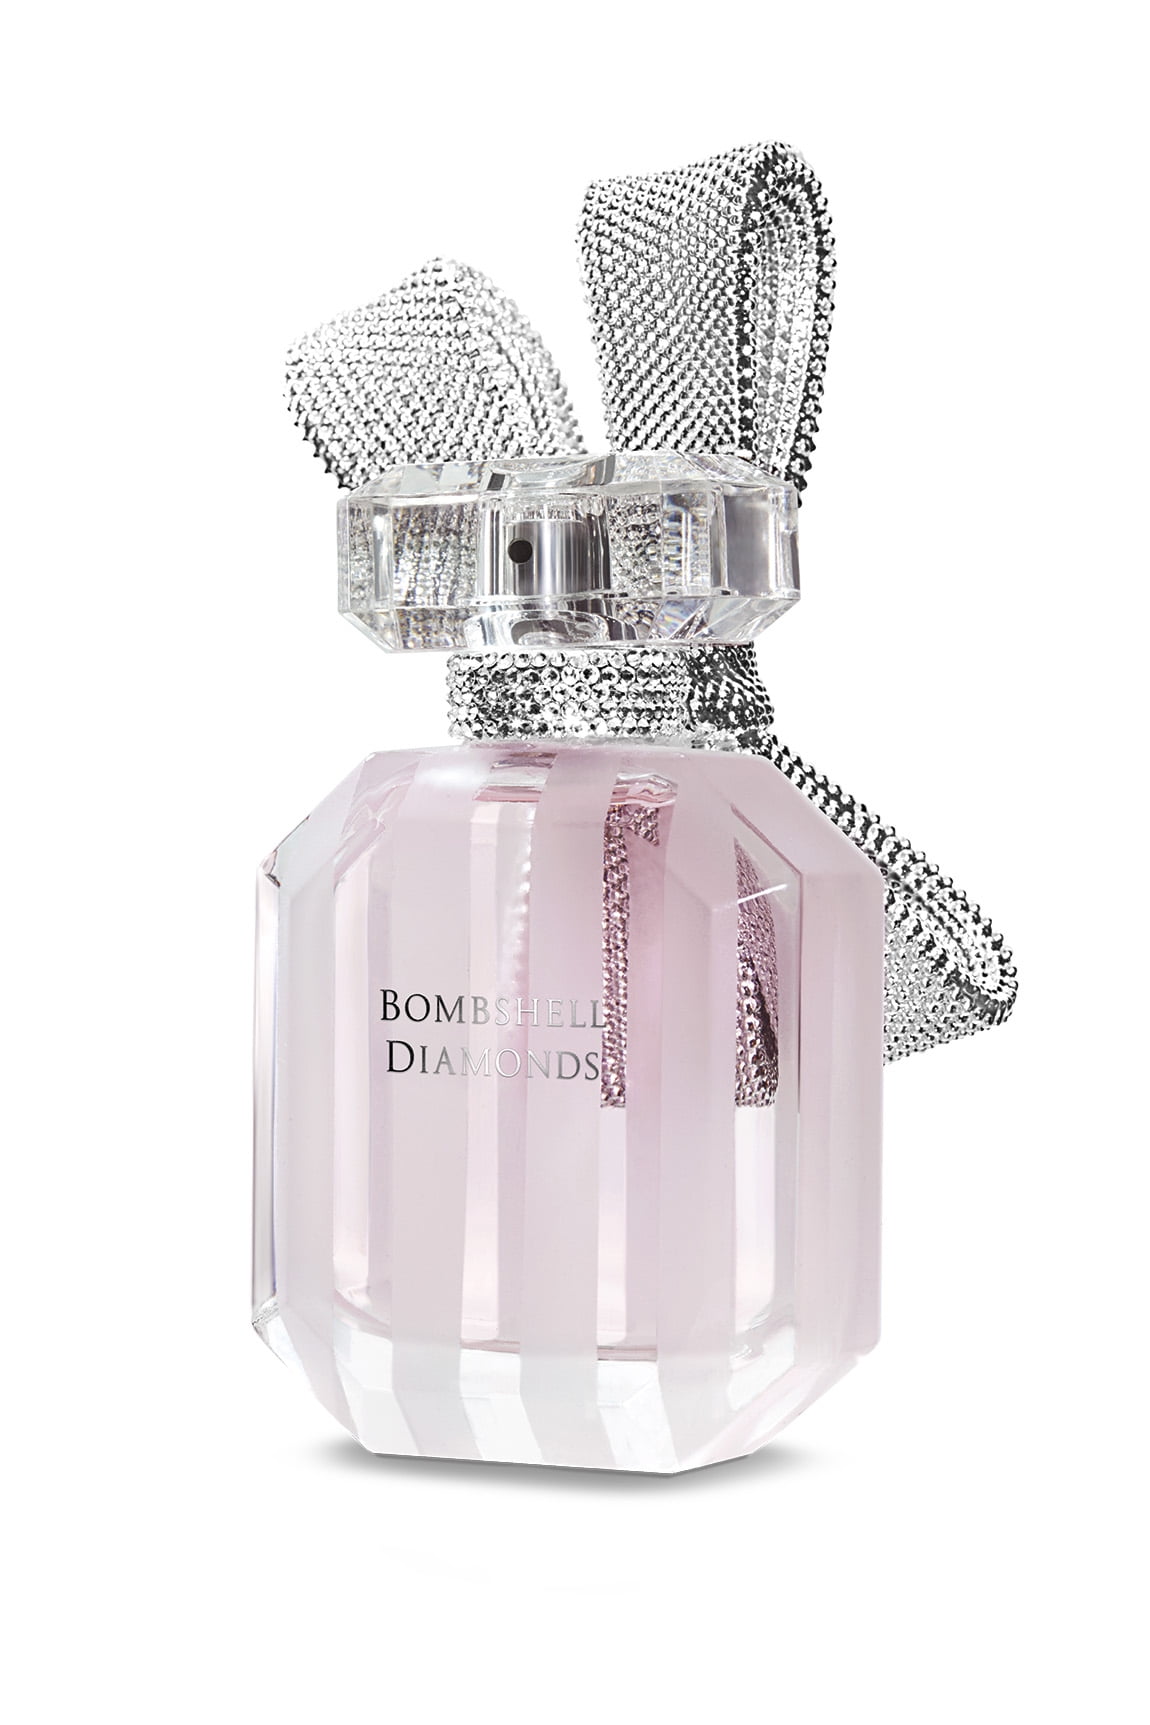 Victoria's Secret Bombshell Diamonds Eau De Parfum 1.7 fl oz / 50 mL - Walmart.com